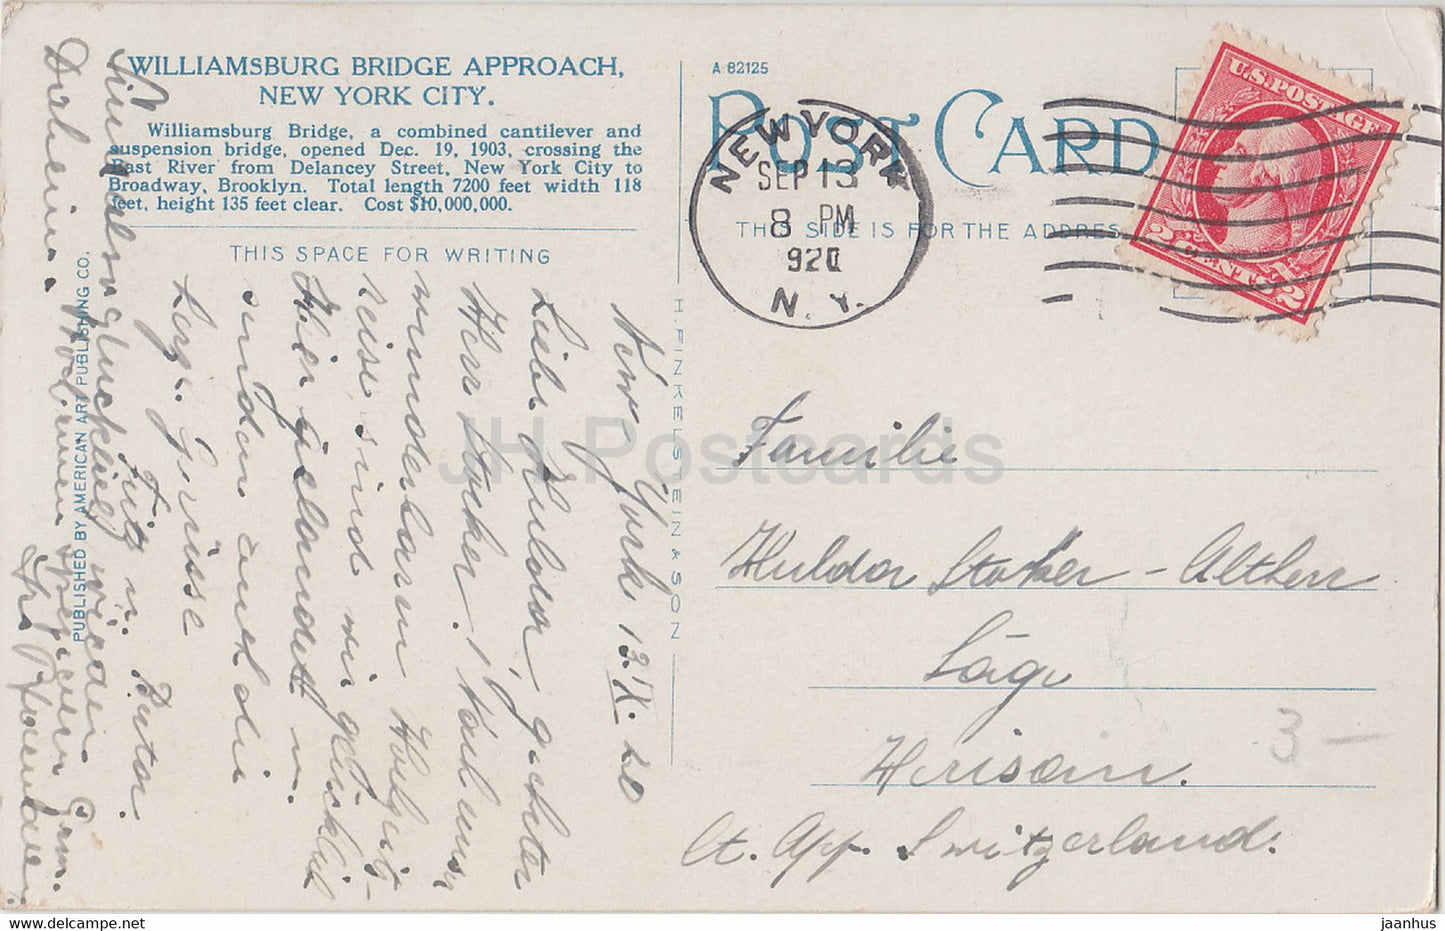 New York City - Williamsburg Bridge Approach - tram - old postcard - 1920 - United States - USA - used